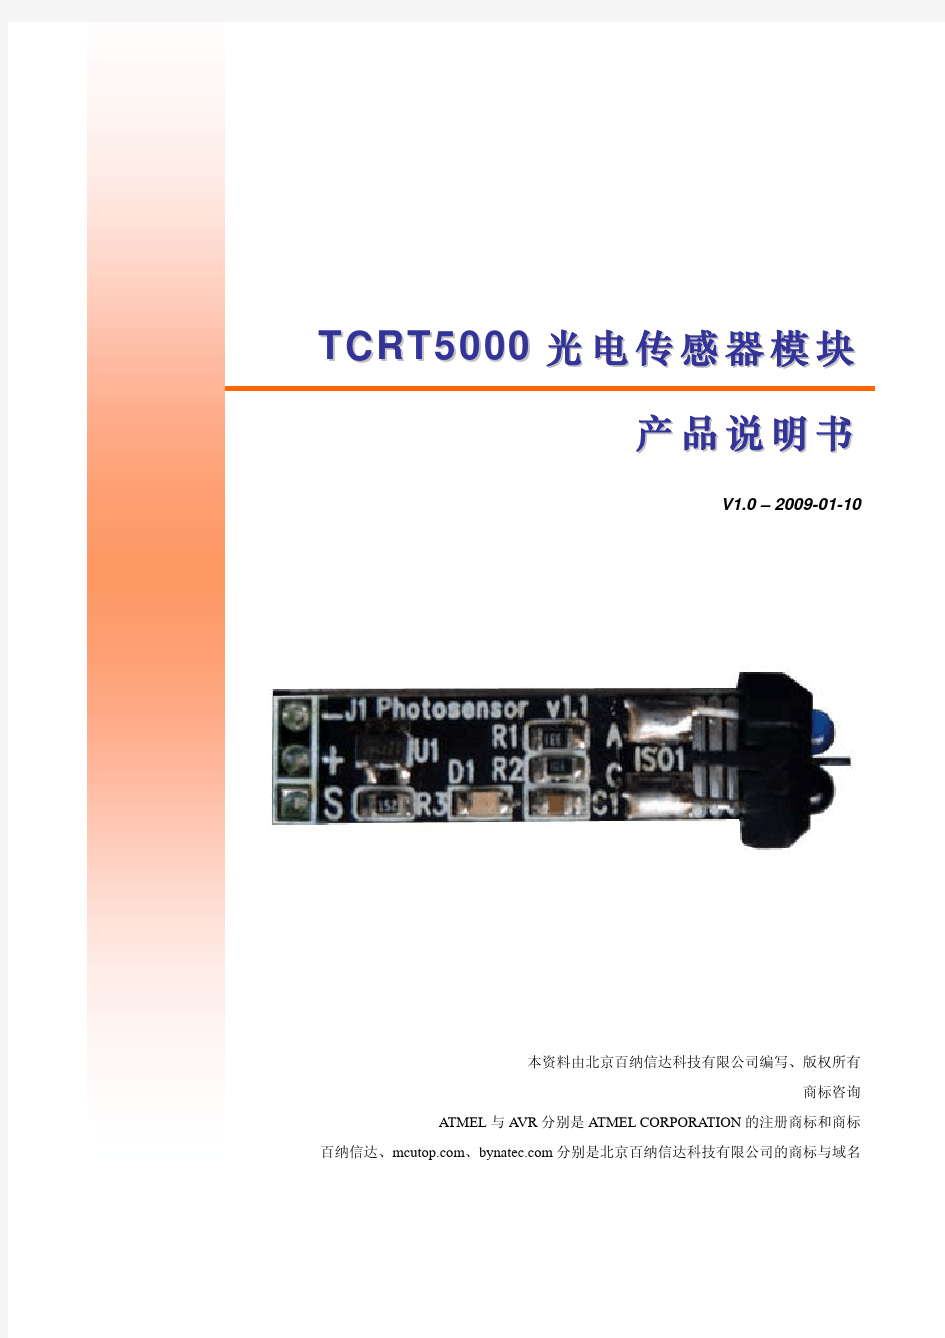 TCRT5000红外光电传感器产品说明书